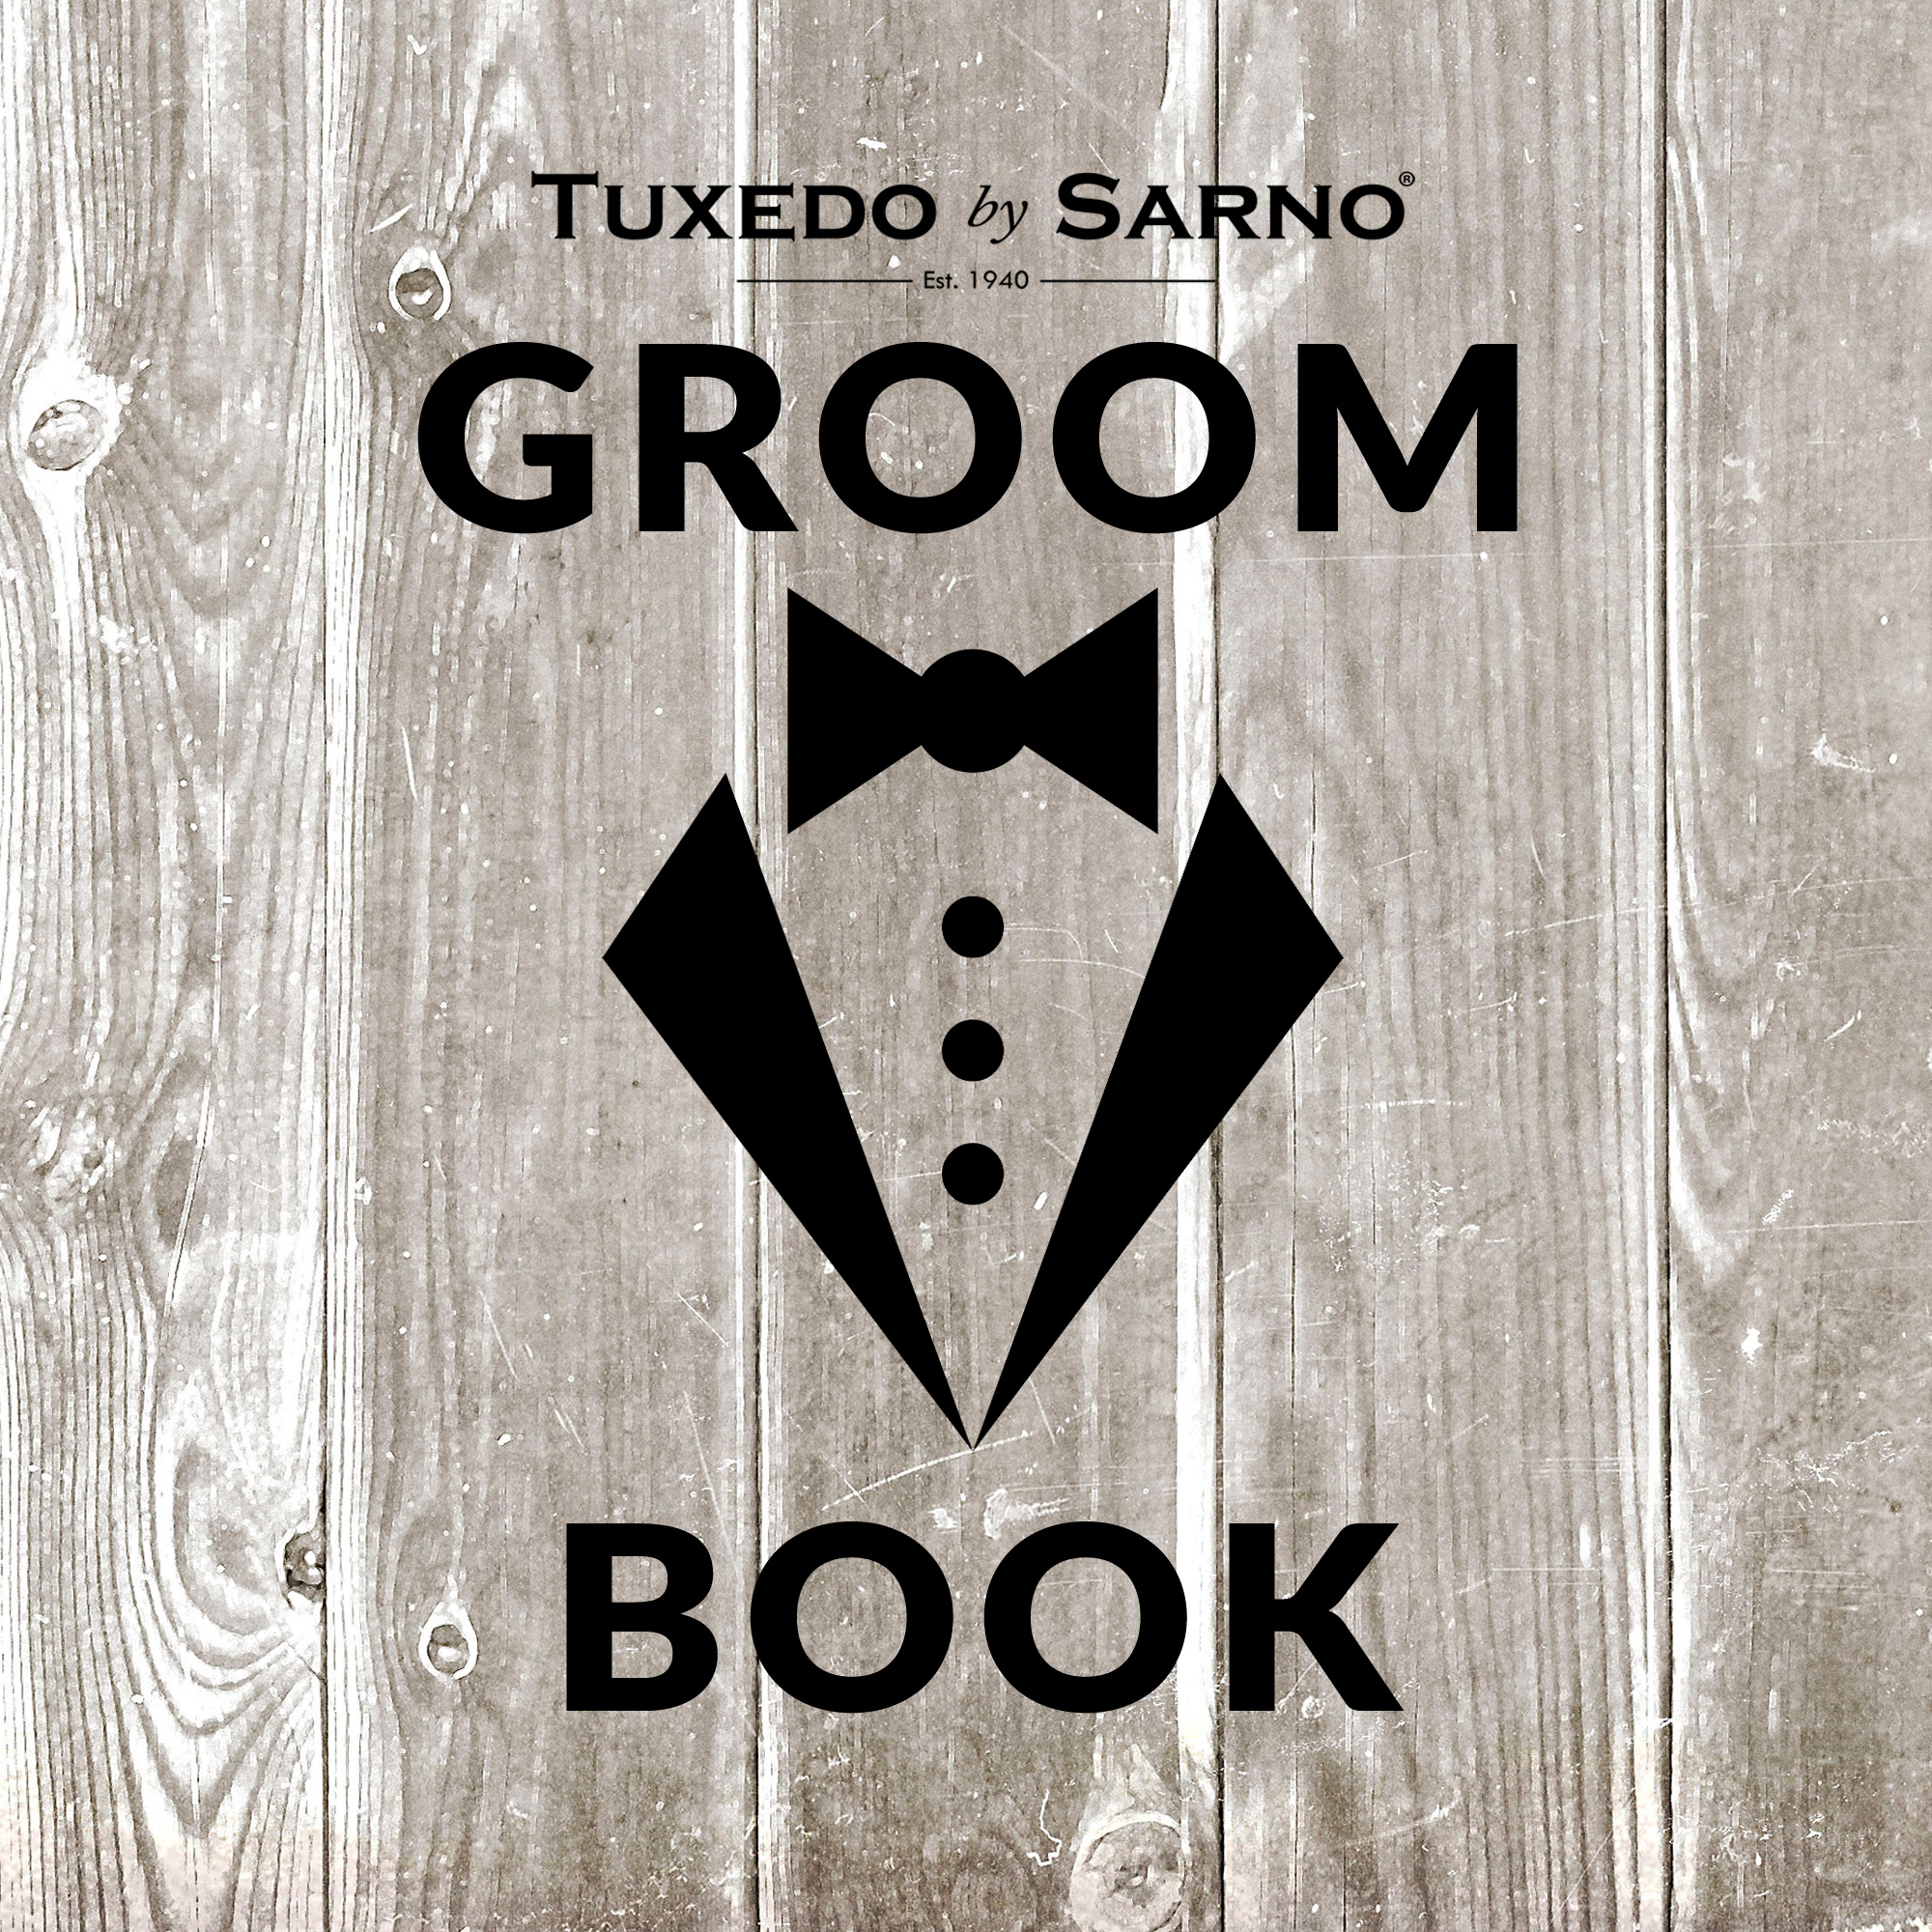 Tuxedo by Sarno - Groom Book